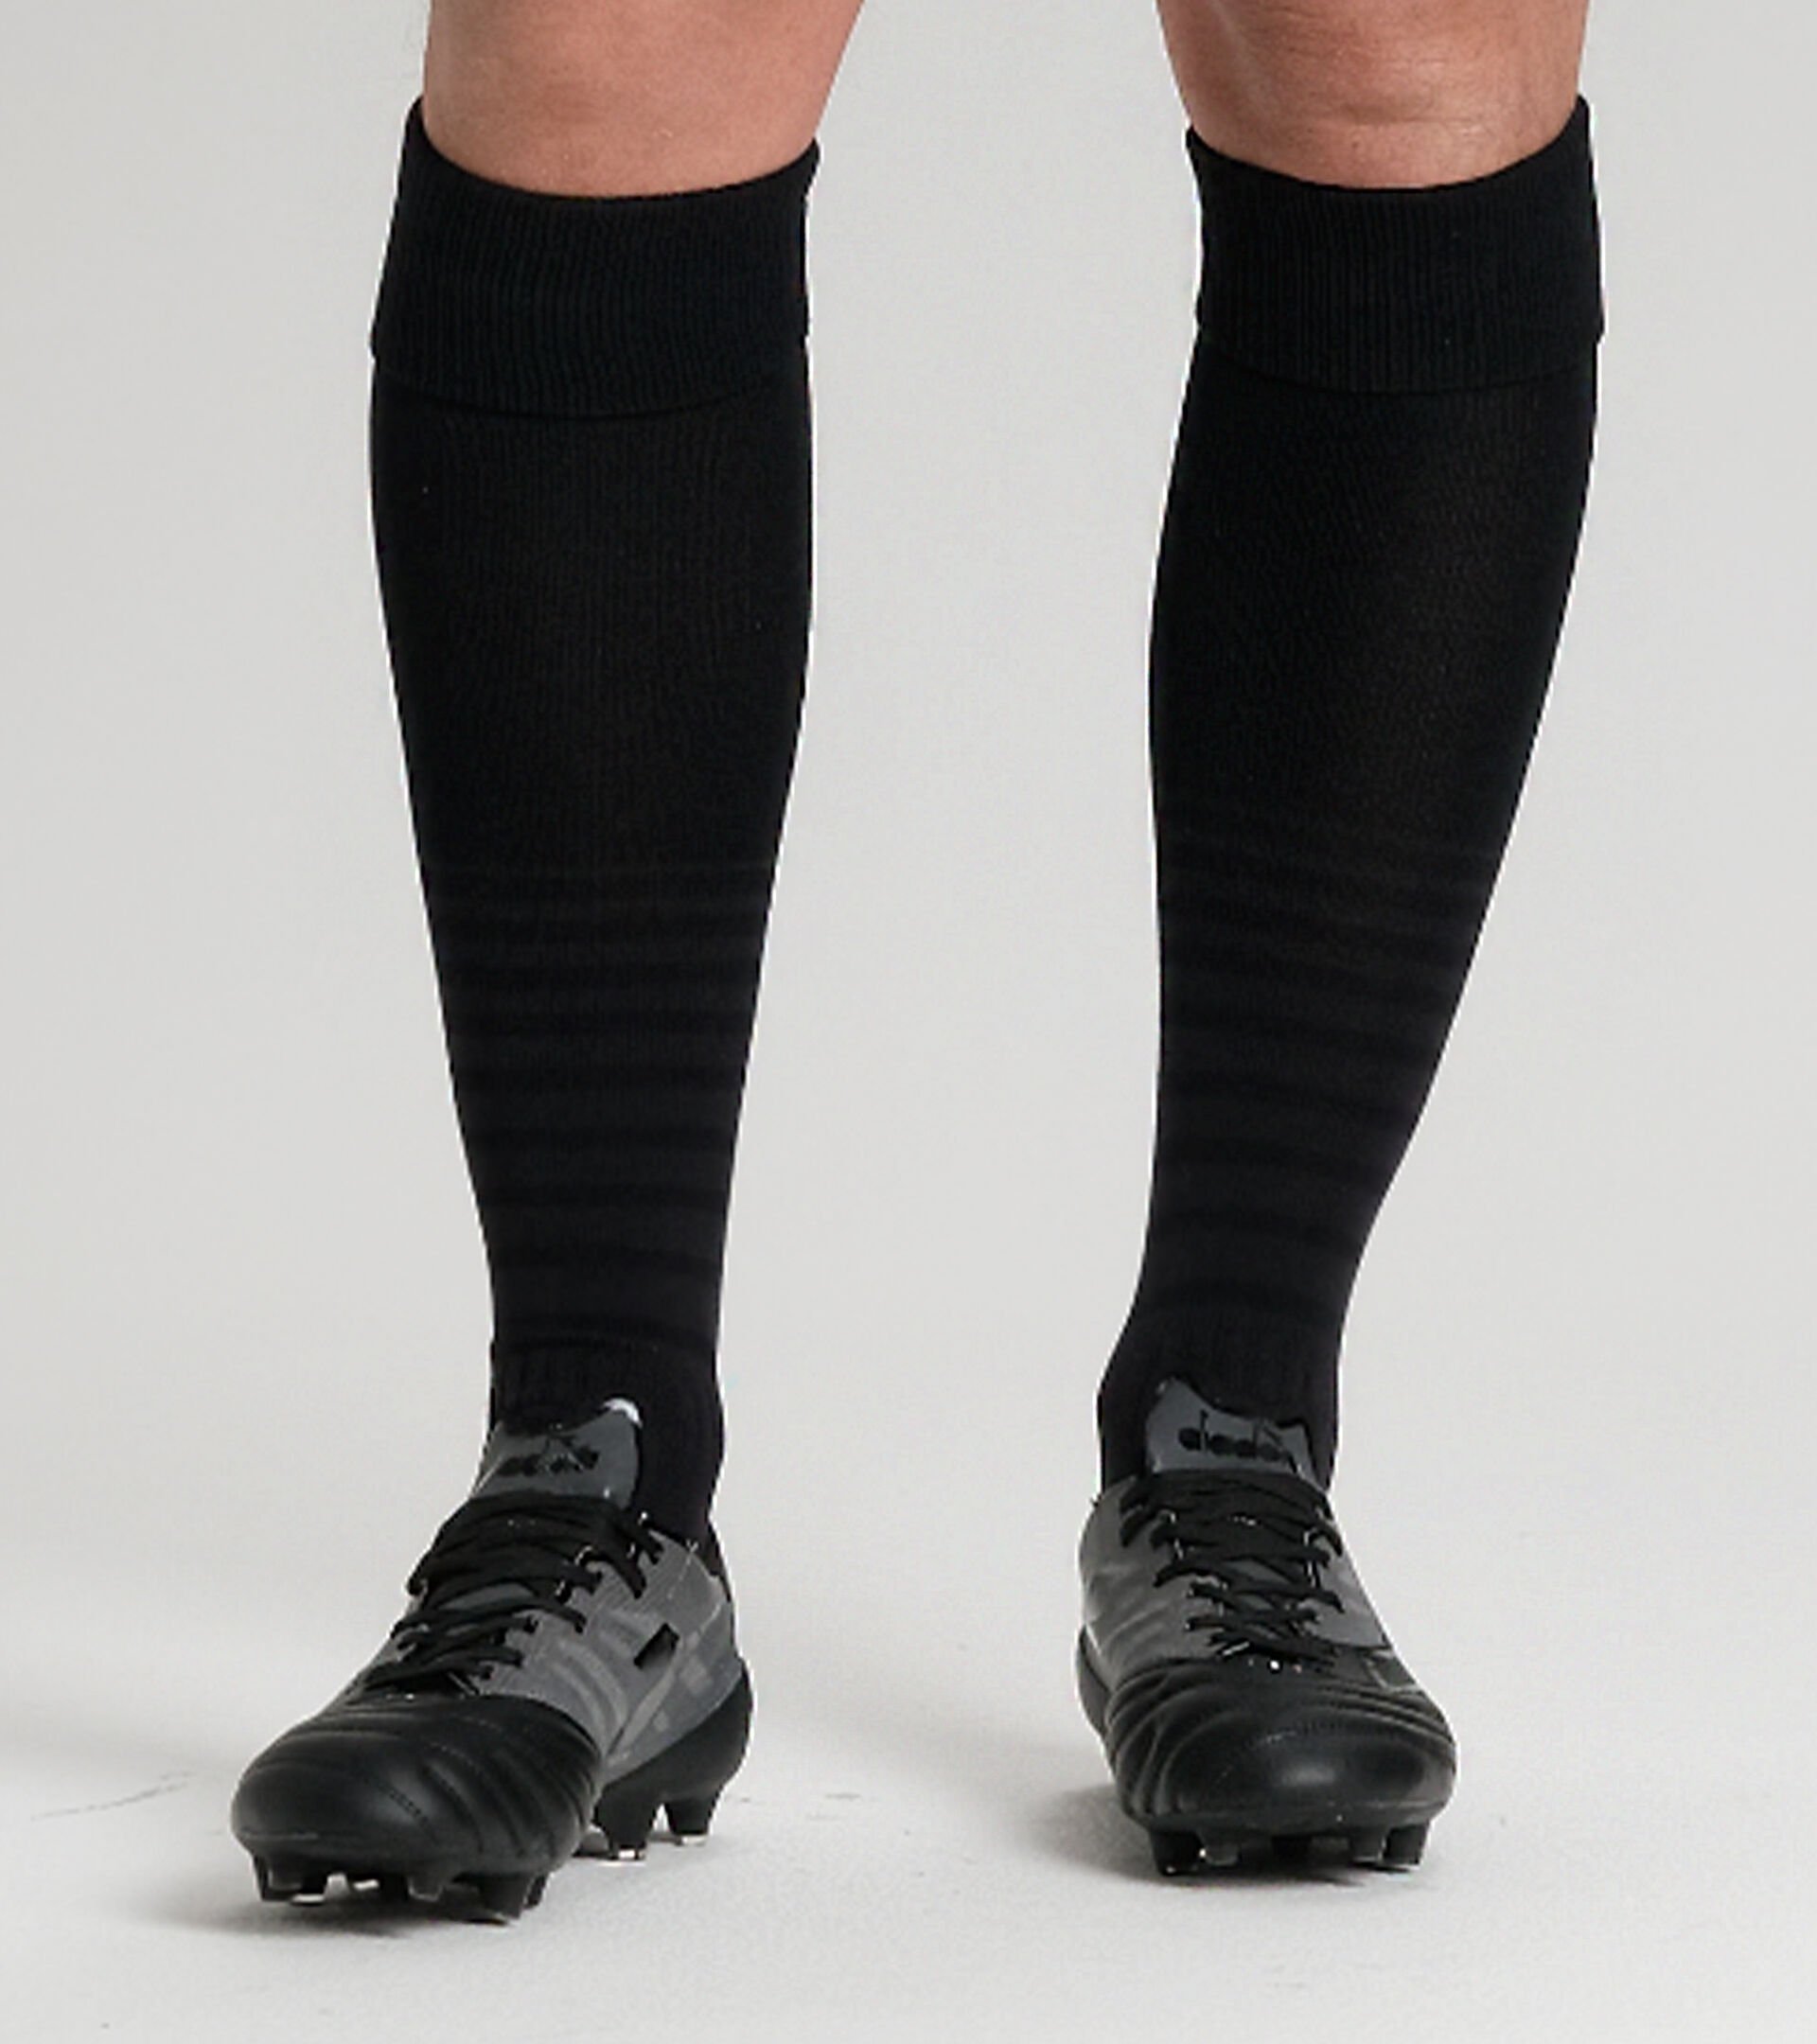 Firm ground football boots - Made in Italy BRASIL ELITE VELOCE ITA LPX BLACK - Diadora